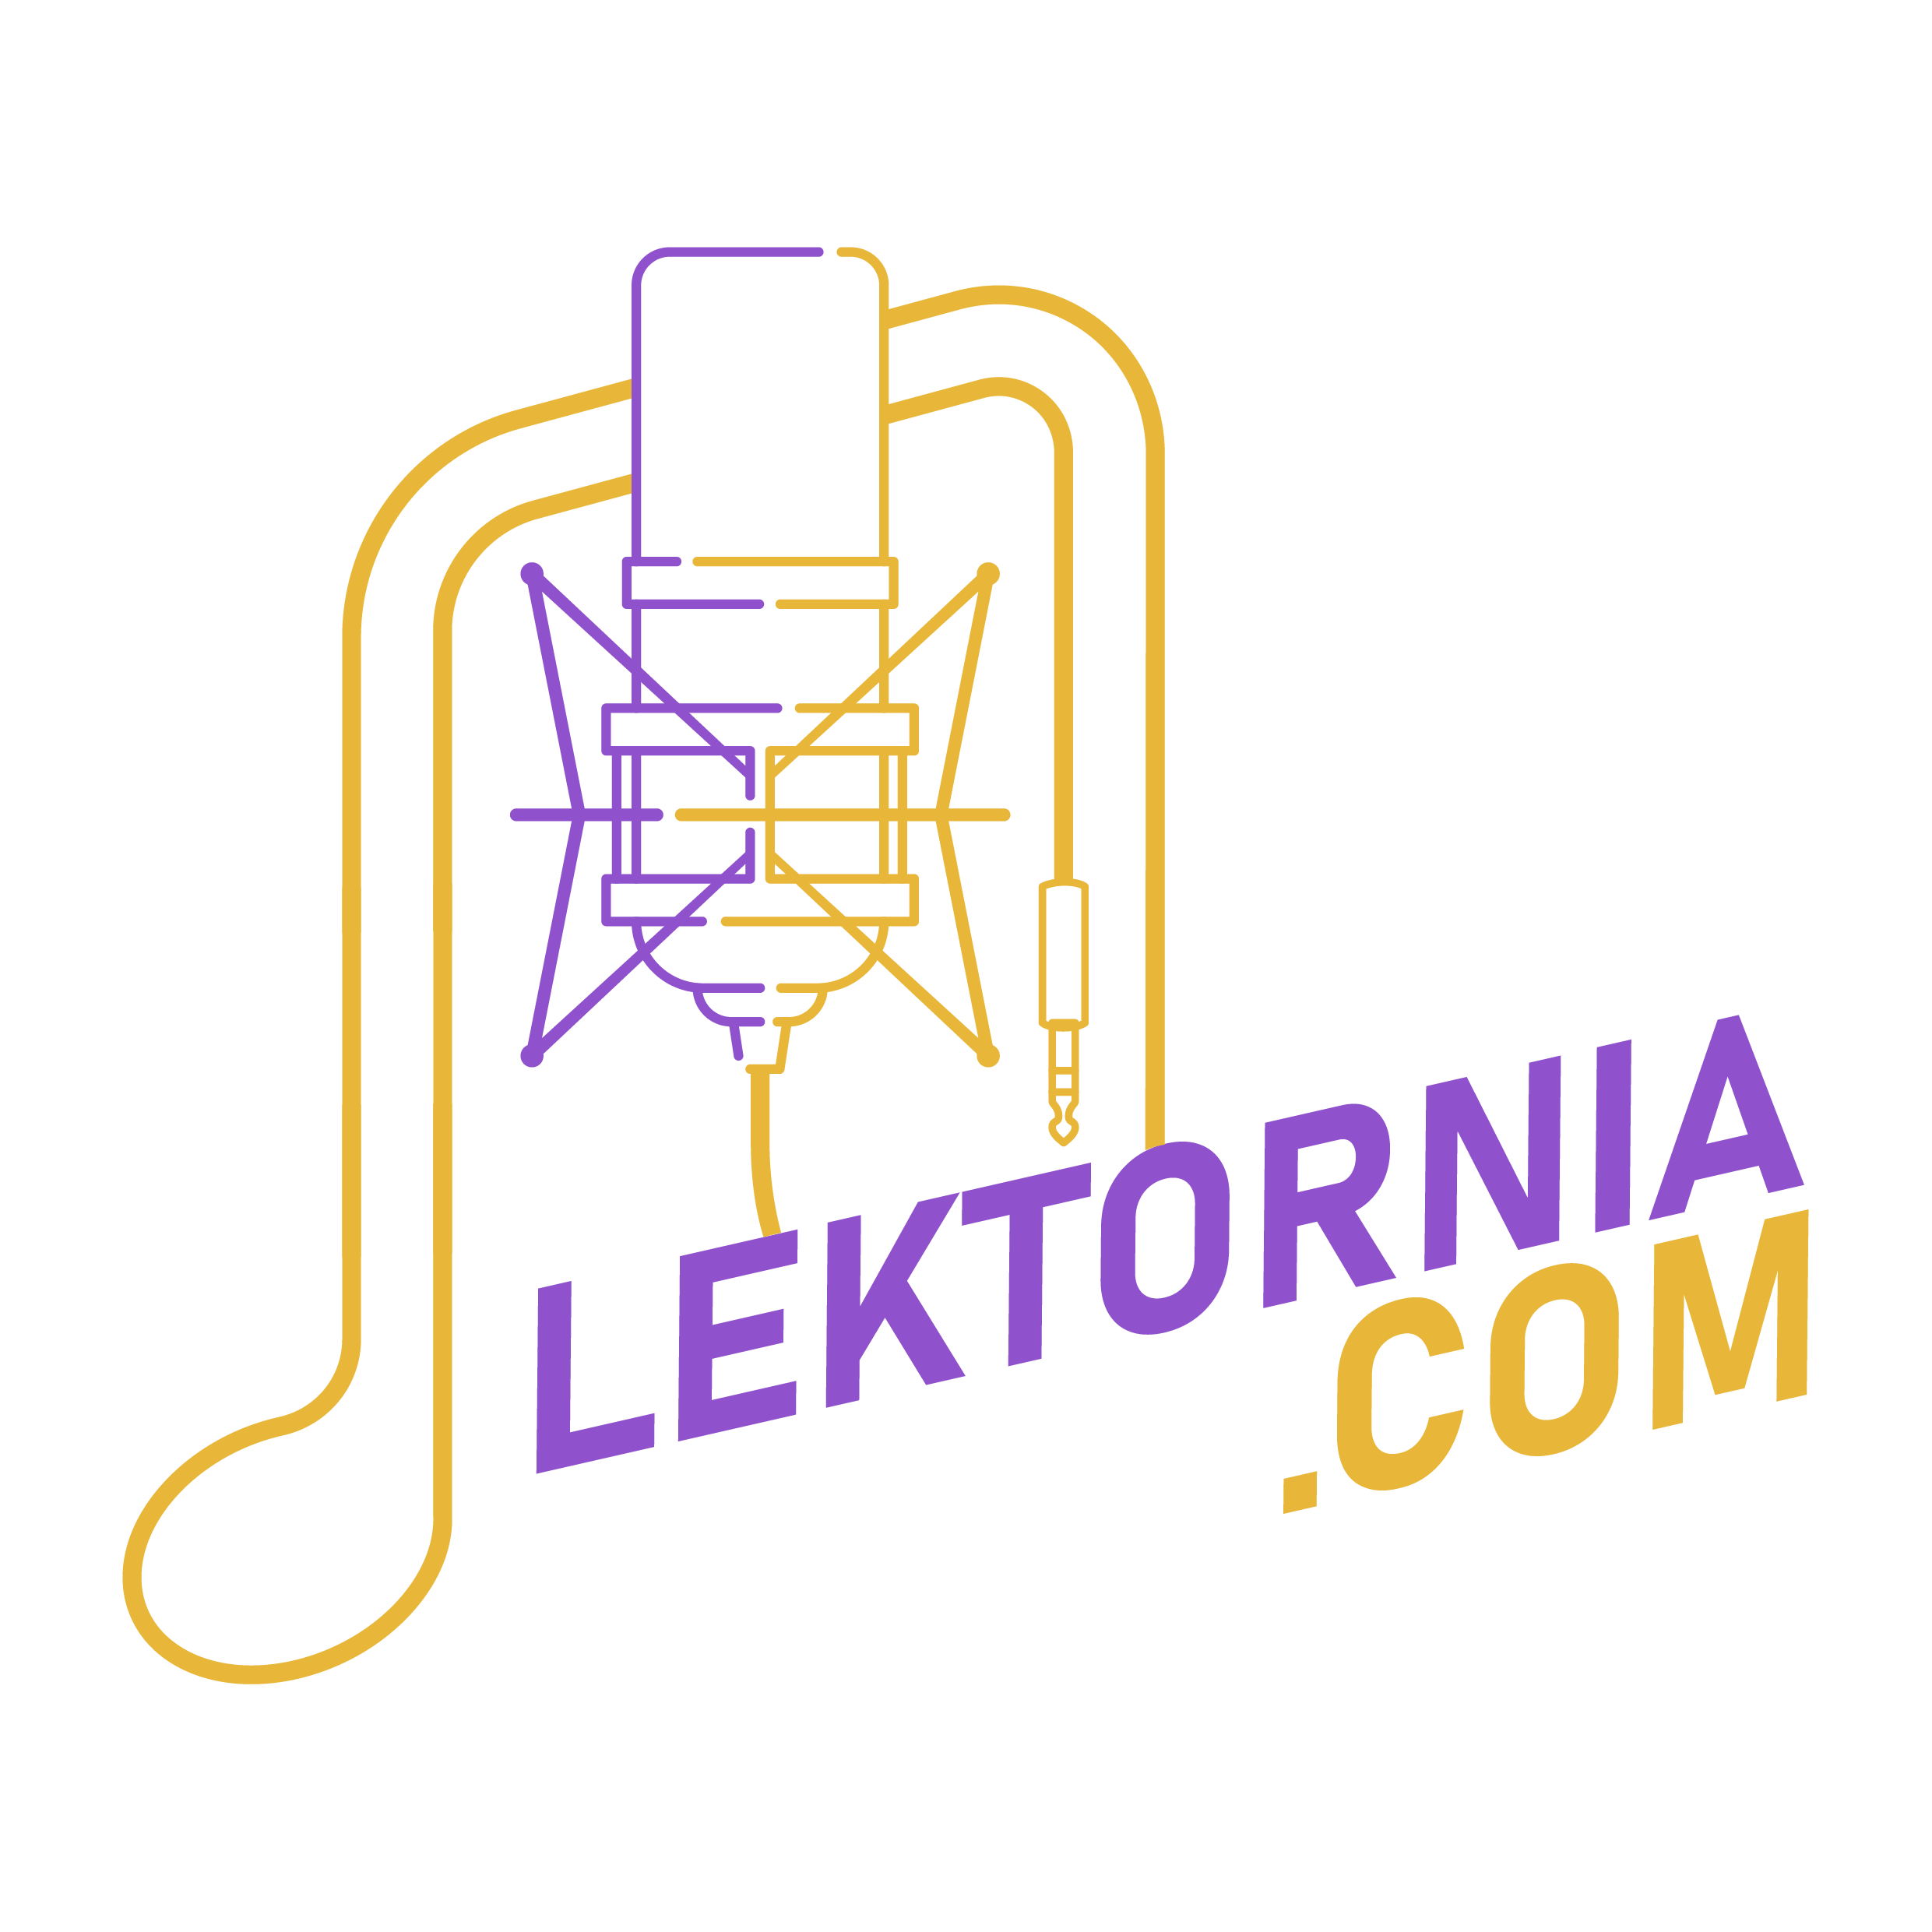 Lektornia.com